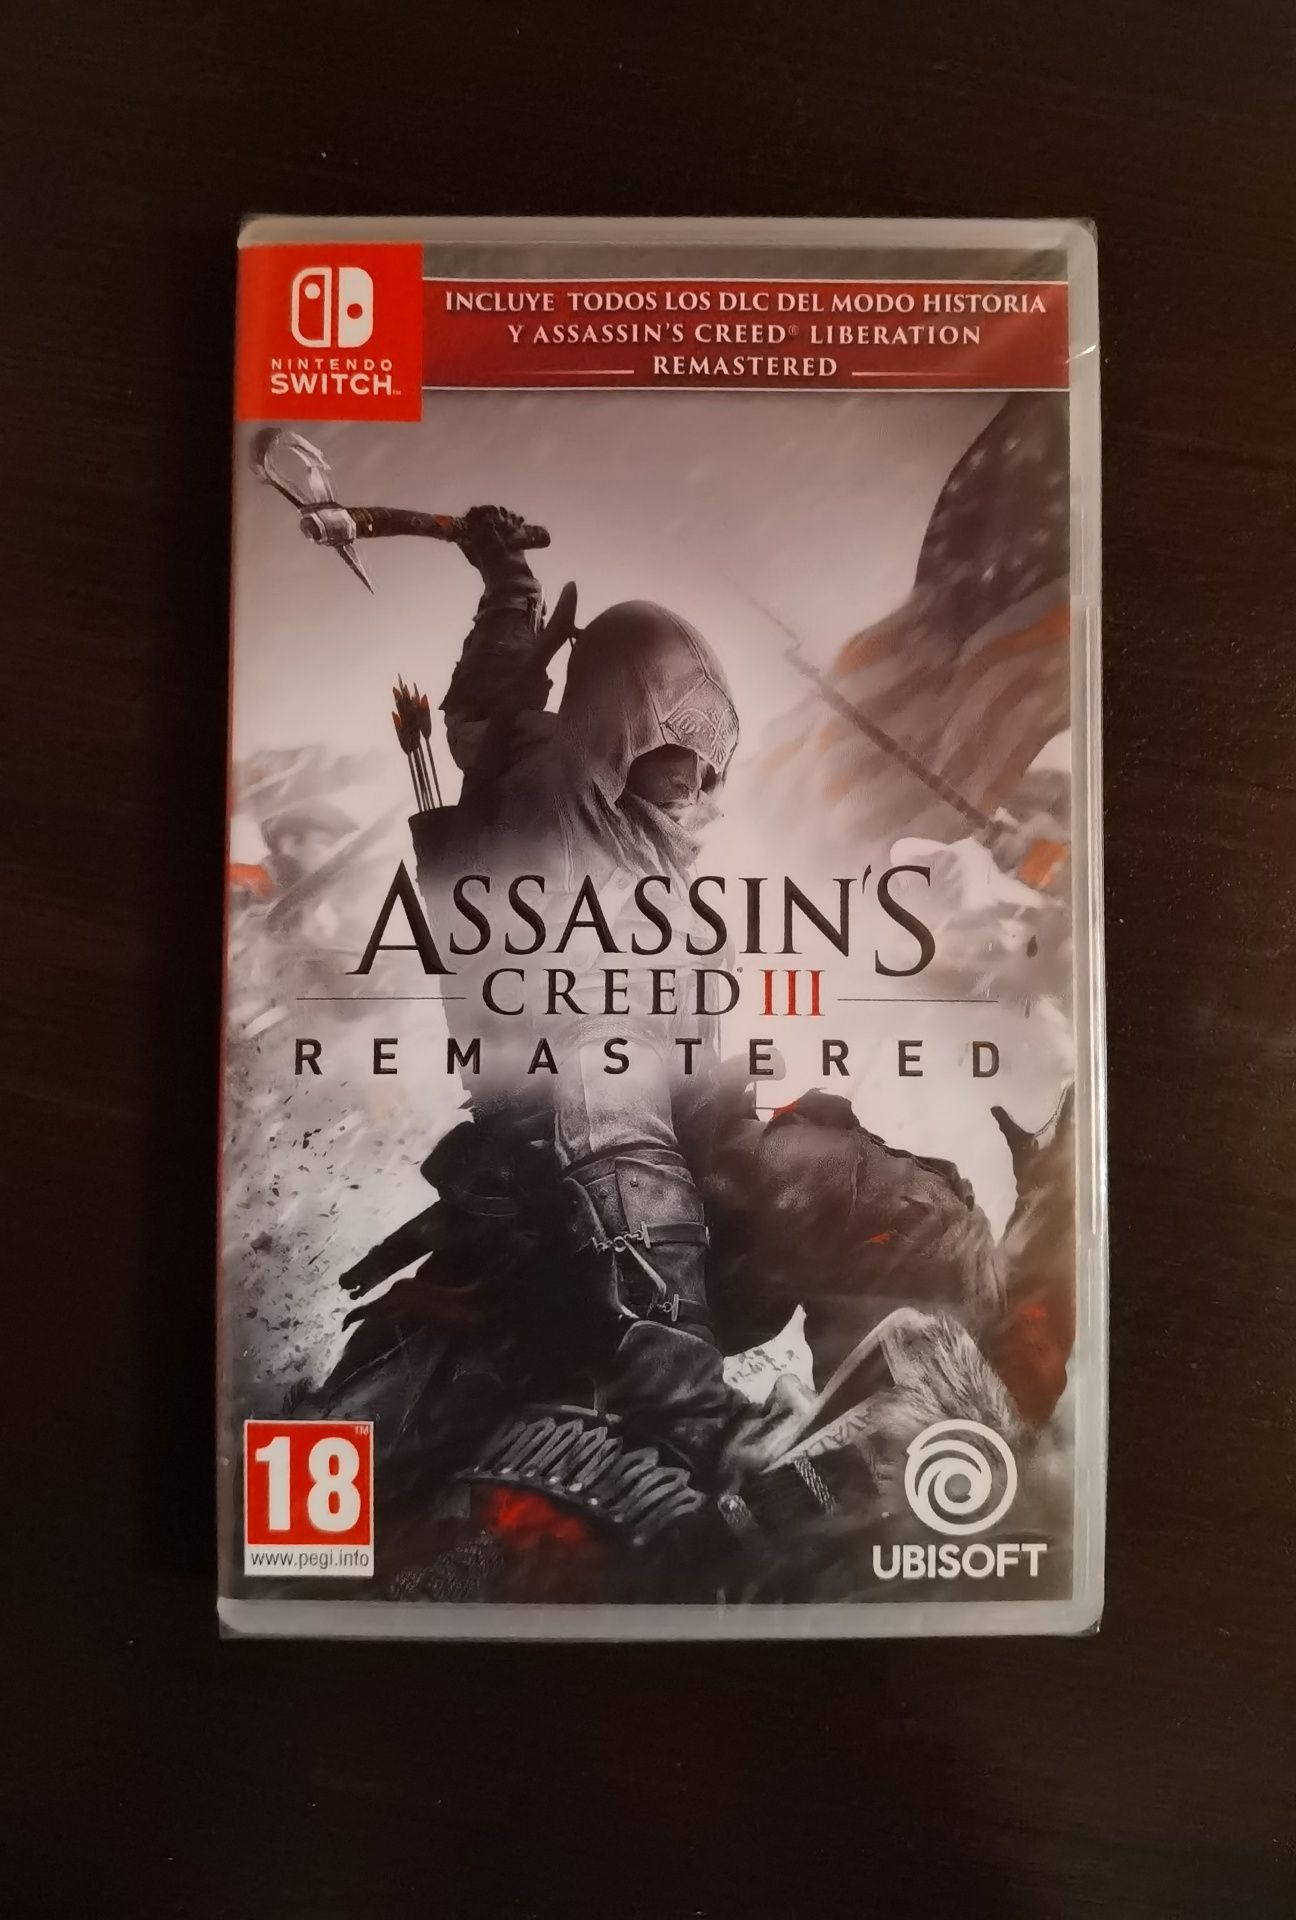 Assassin's Creed III Remastered para Nintendo Switch. 

Estado de